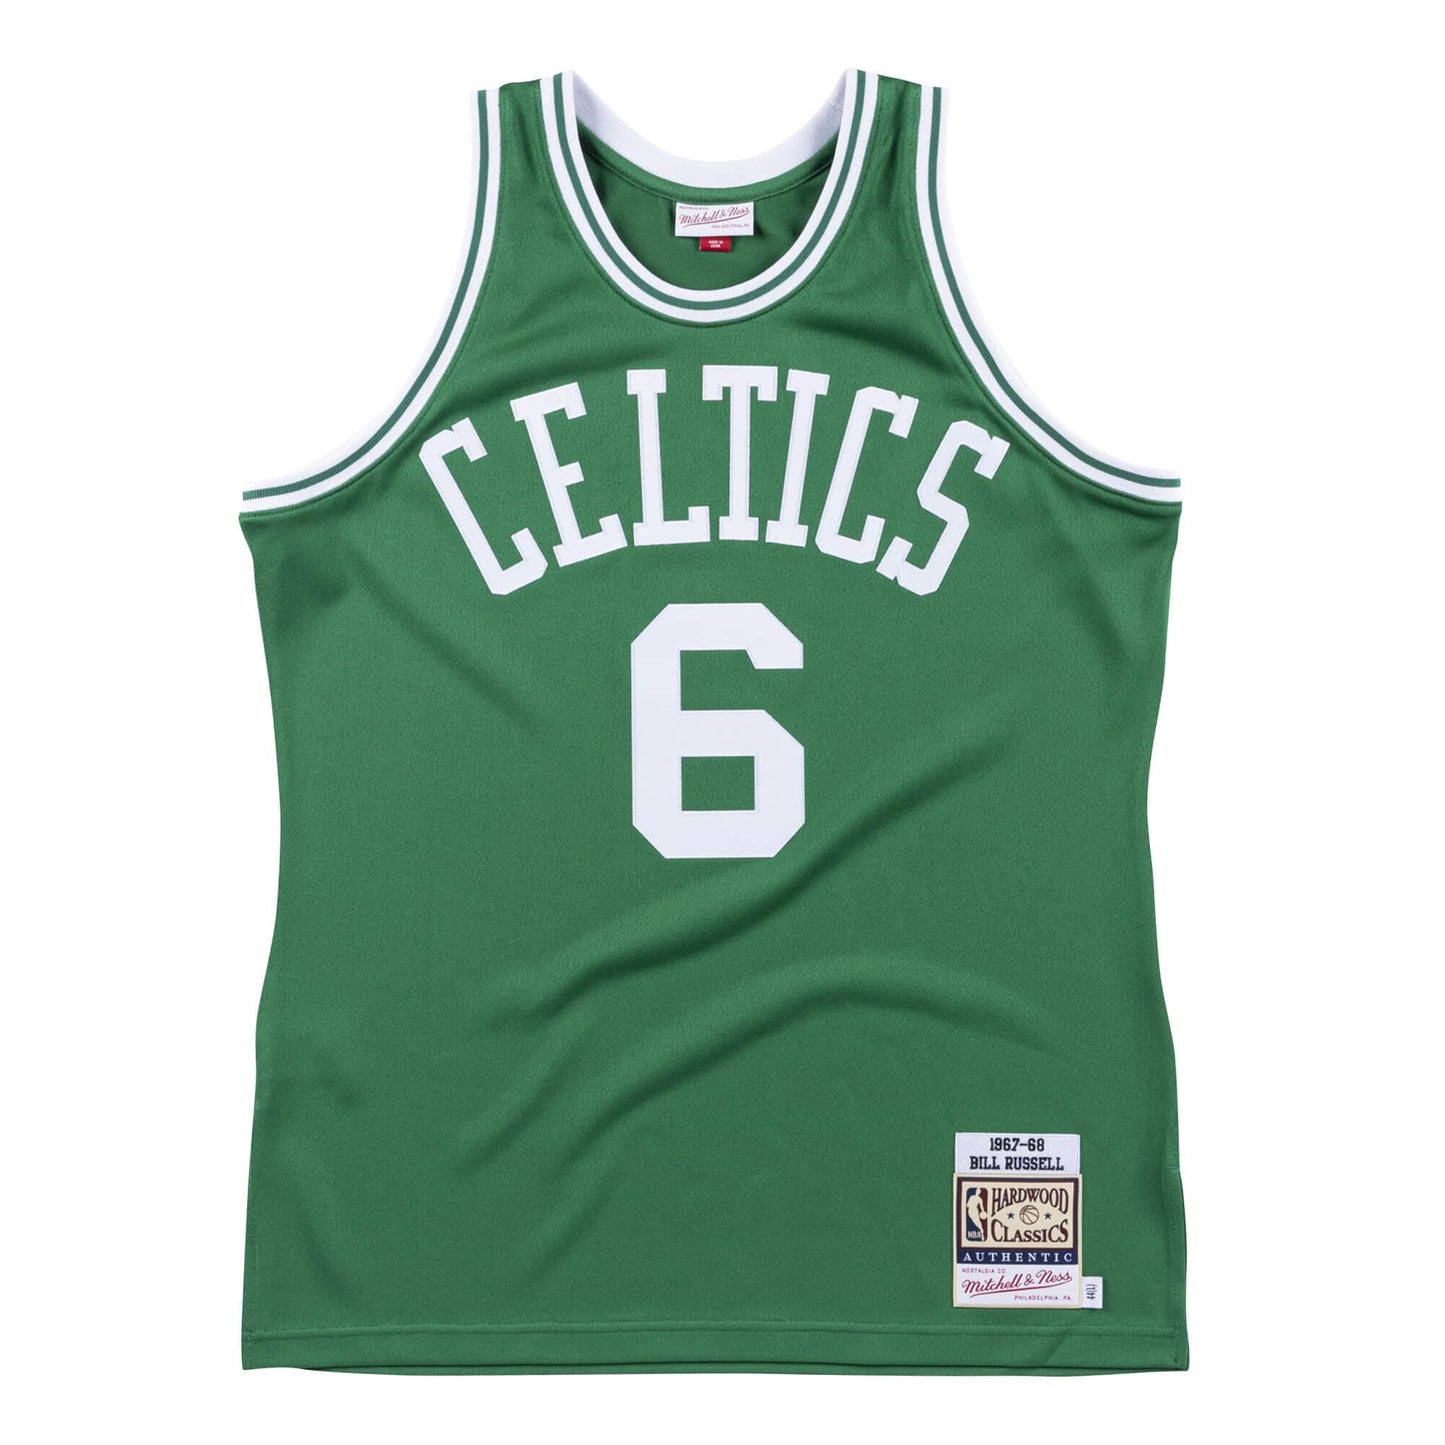 Authentic Jersey Boston Celtics 1967-68 Bill Russell